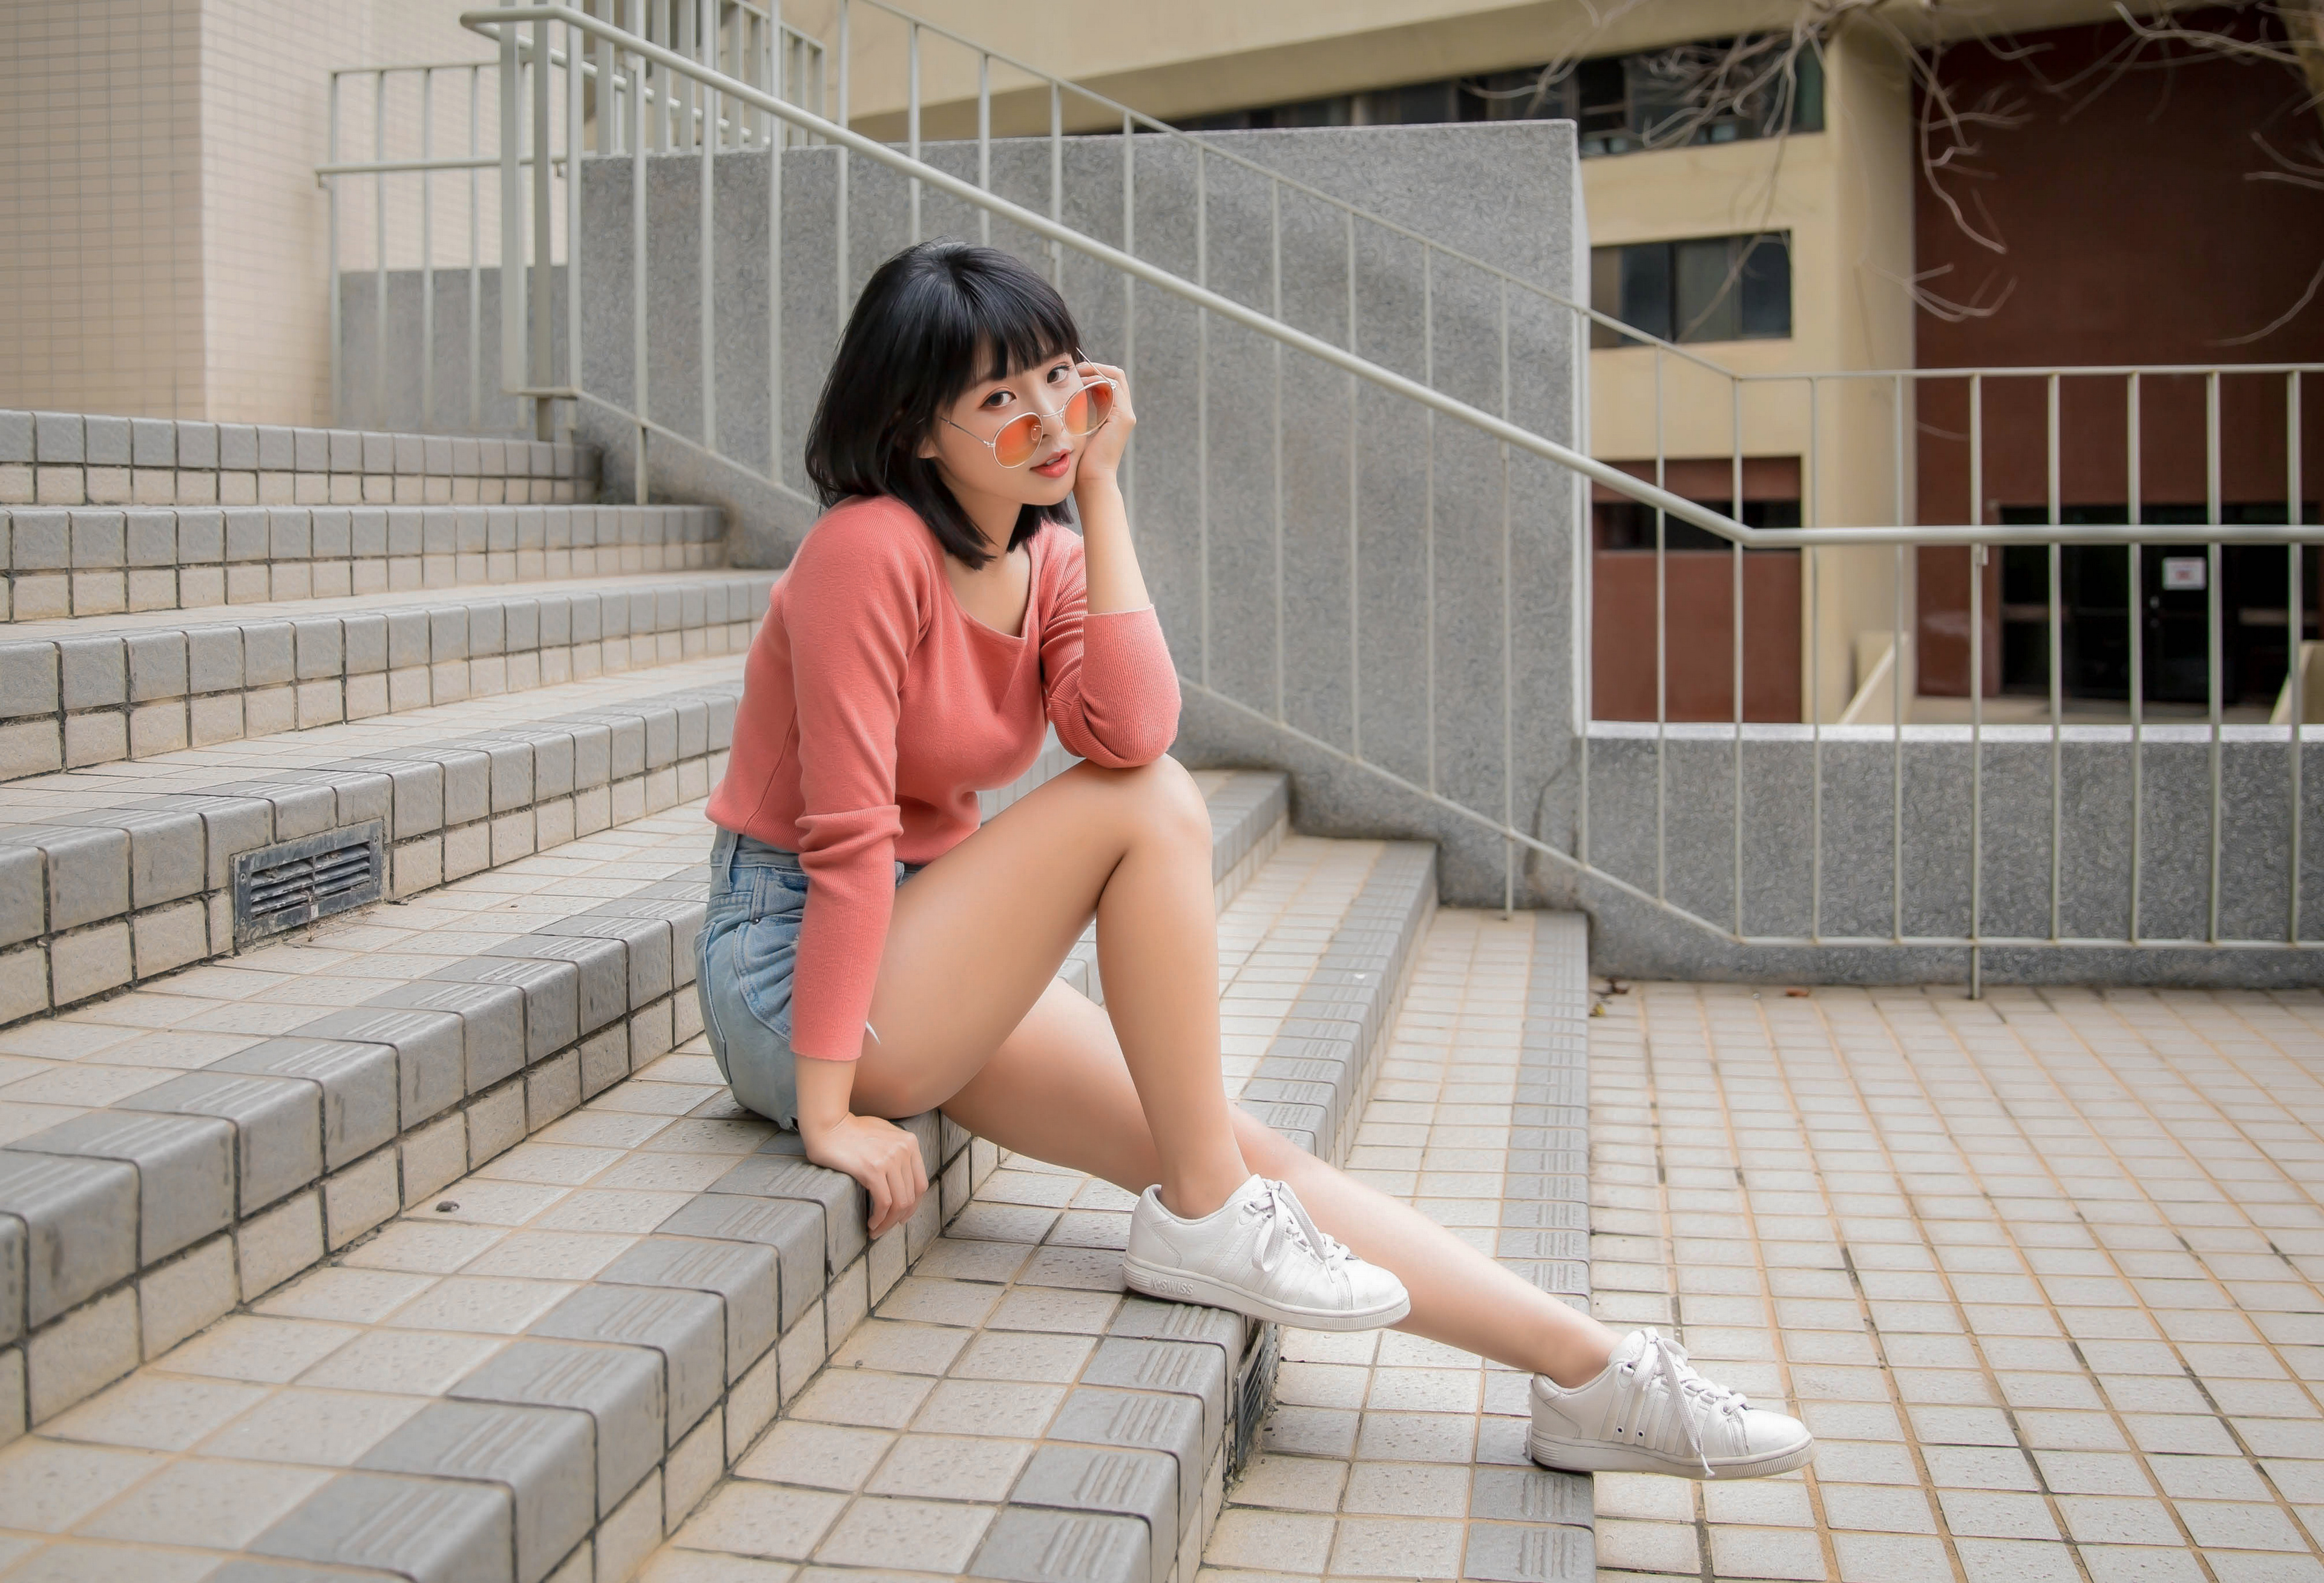 Asian Model Women Dark Hair Sitting Urban Women Outdoors Stairs Legs White Shoes Sweater Black Hair  3840x2615